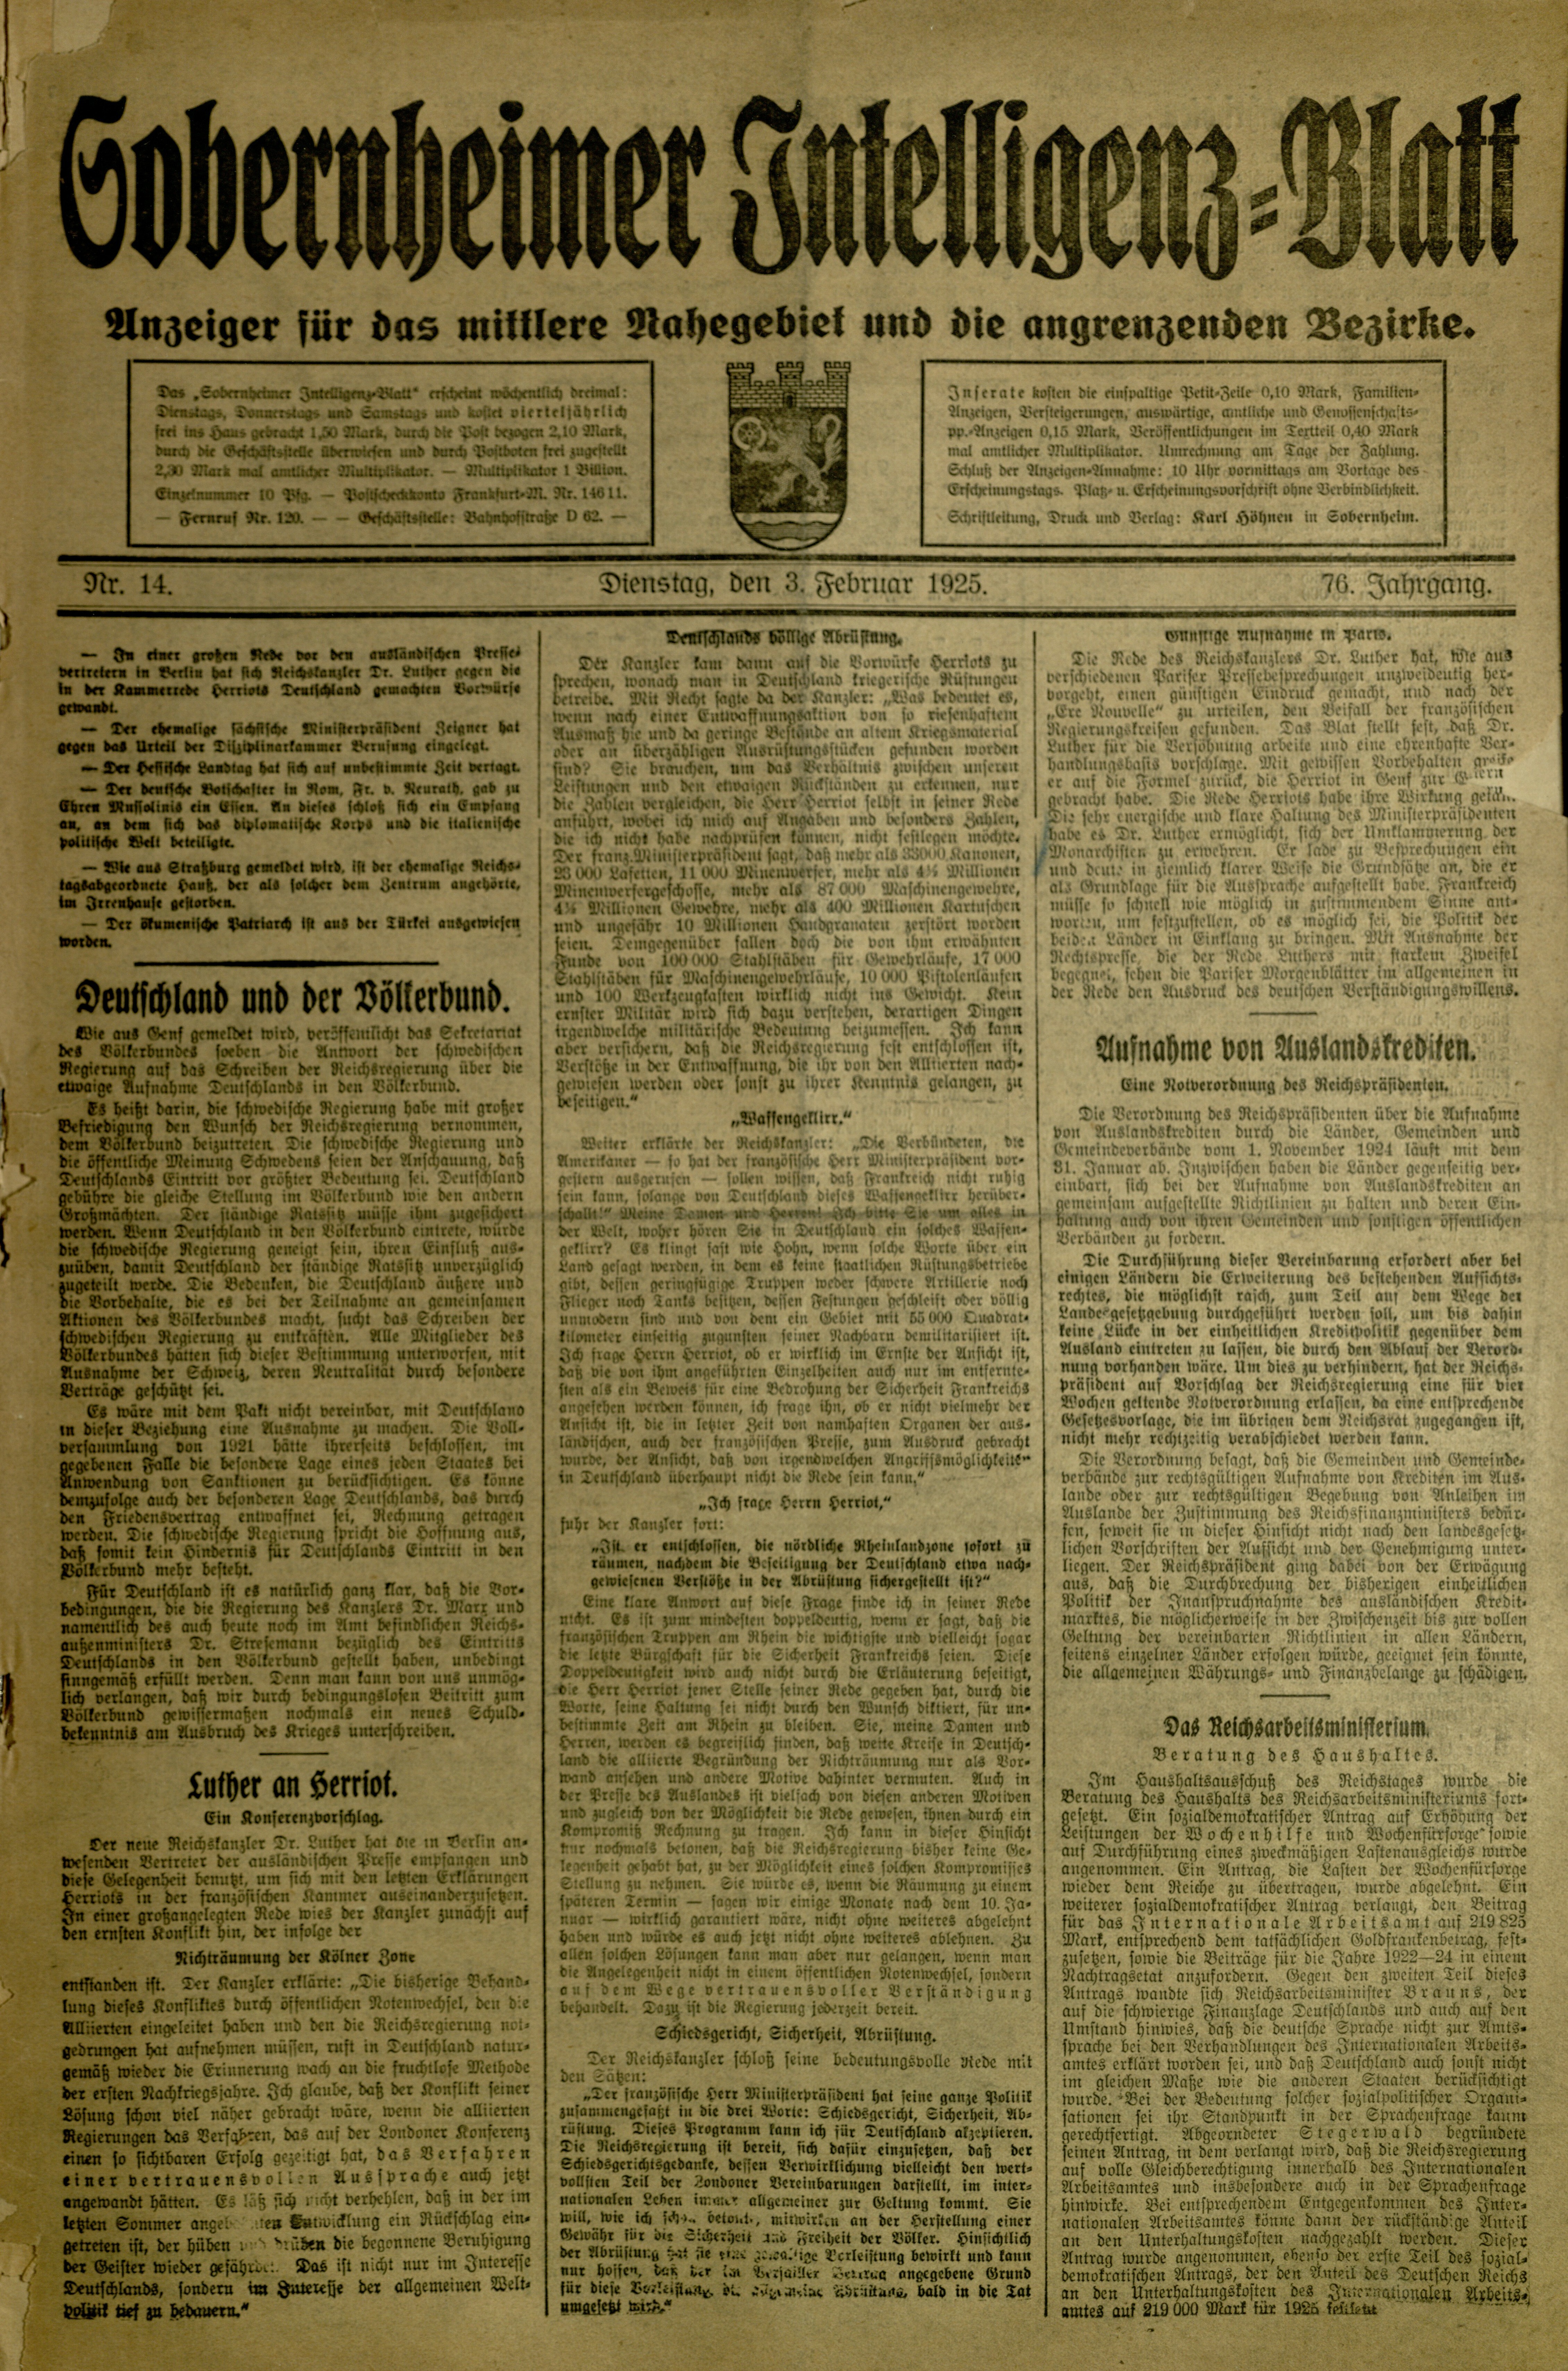 Zeitung: Sobernheimer Intelligenzblatt; Februar 1925, Jg. 76 Nr. 14 (Heimatmuseum Bad Sobernheim CC BY-NC-SA)